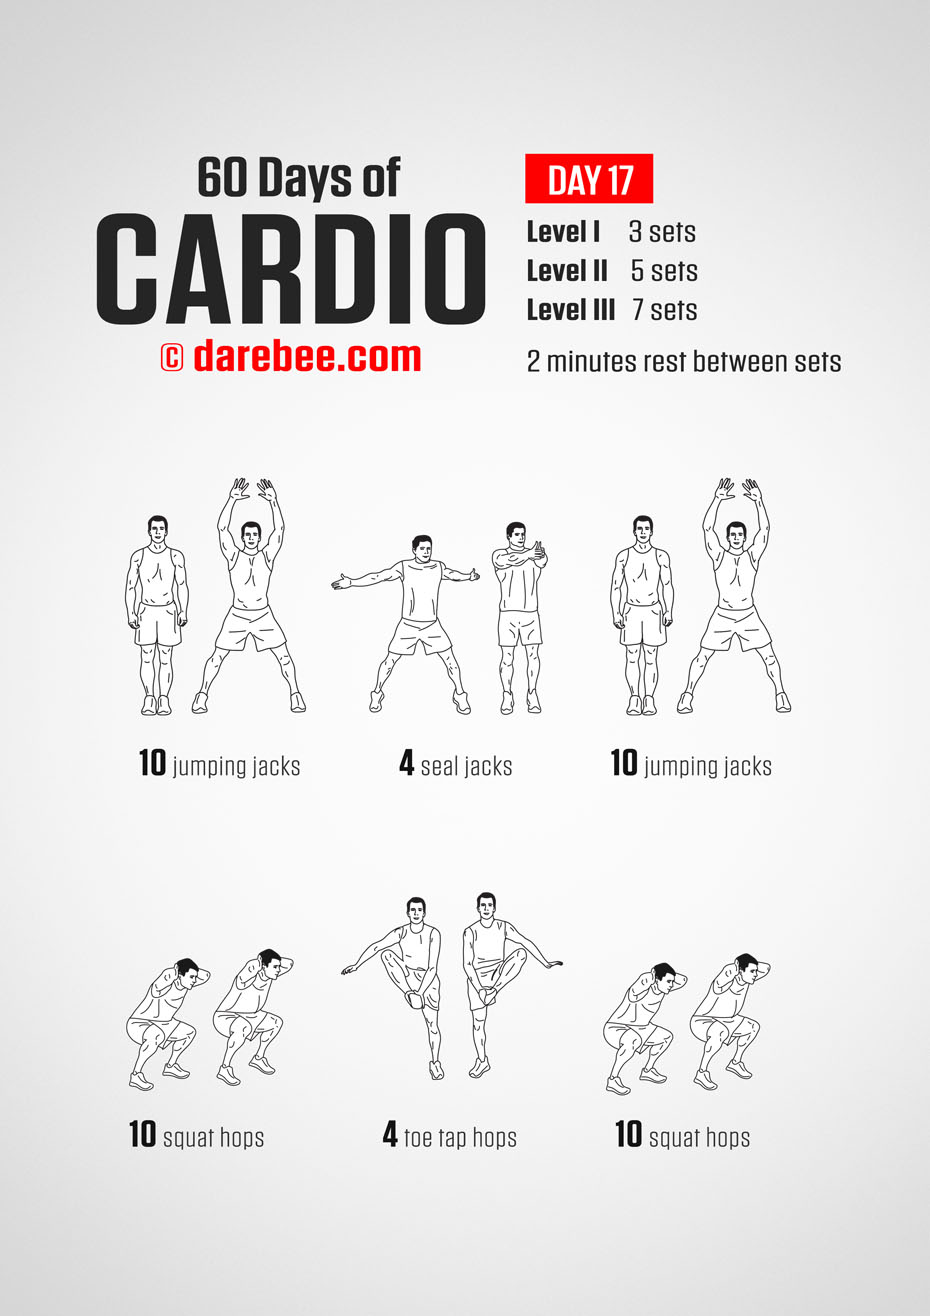 60 Days of Cardio by DAREBEE